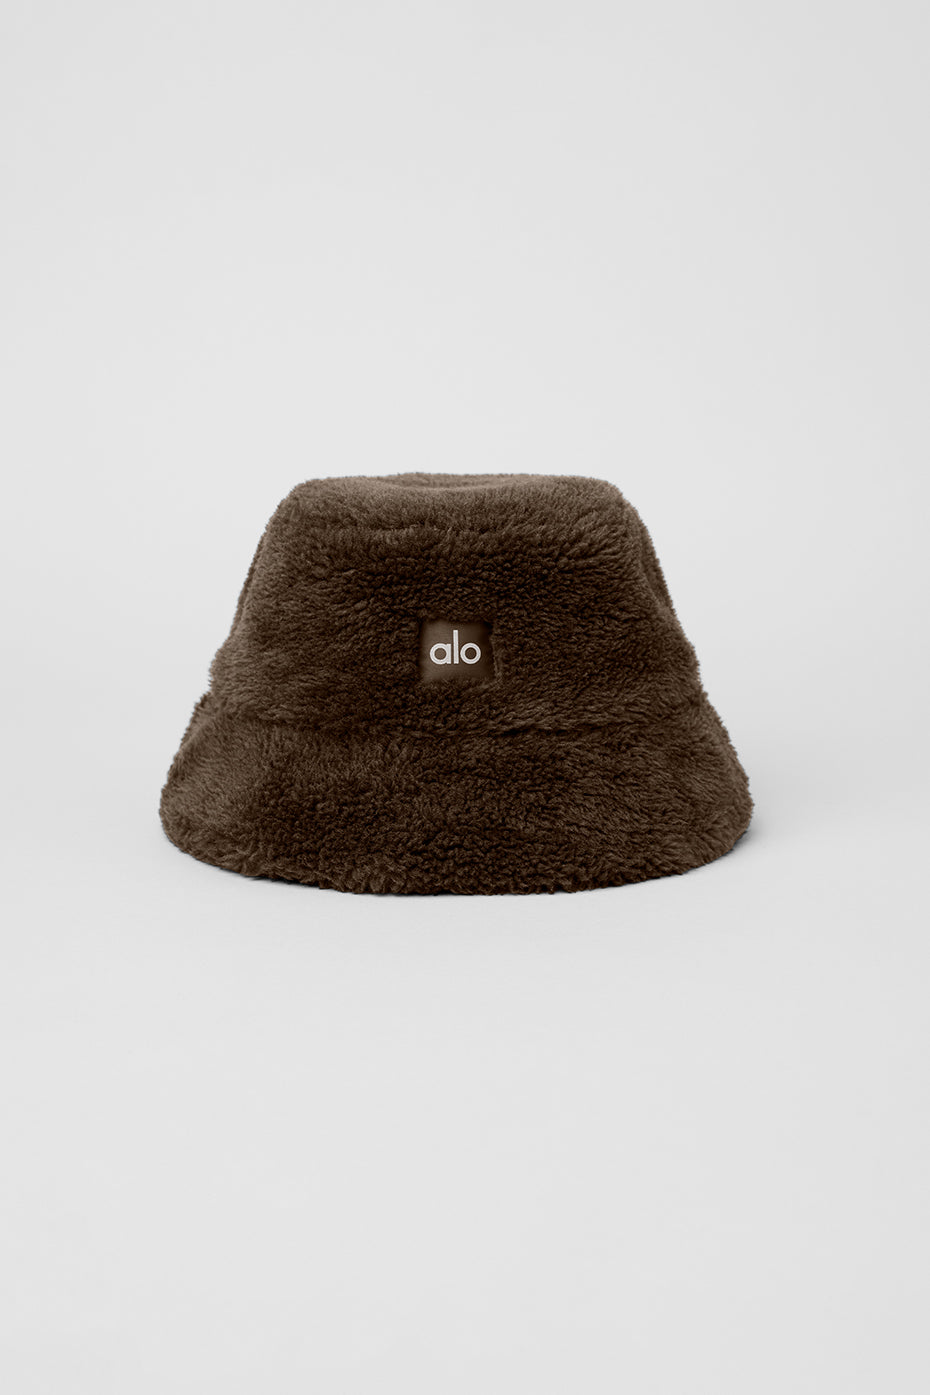 Espresso Yoga Alo Bucket Foxy Sherpa Hat - |